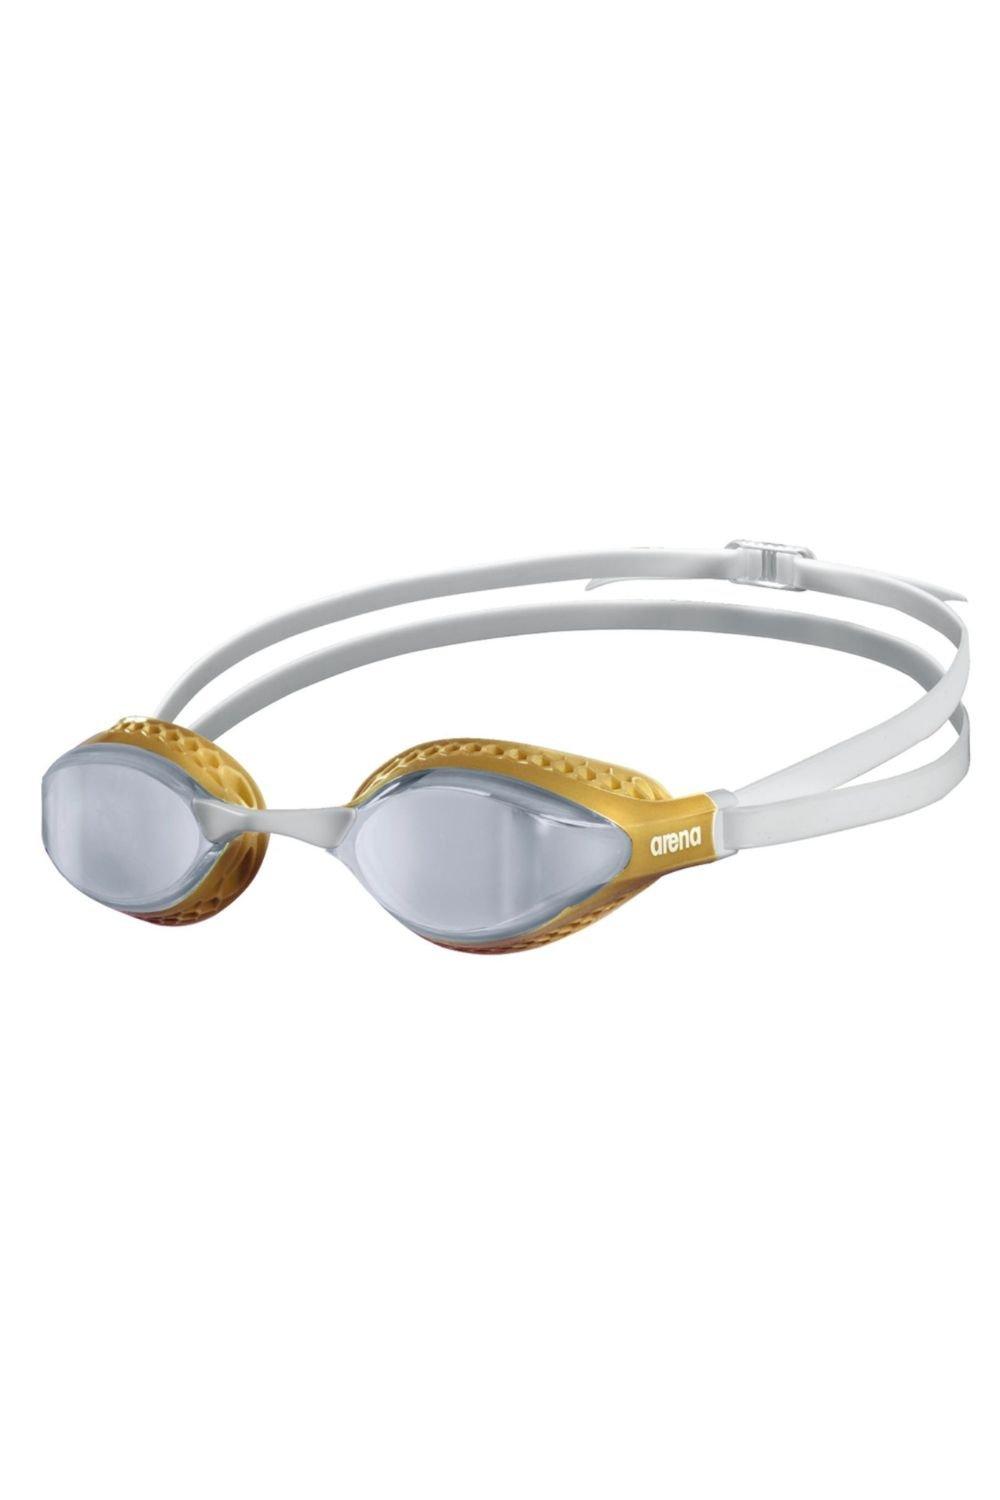 Очки для плавания с зеркалом Airspeed Arena, золото очки для плавания arena airspeed clear turquoise